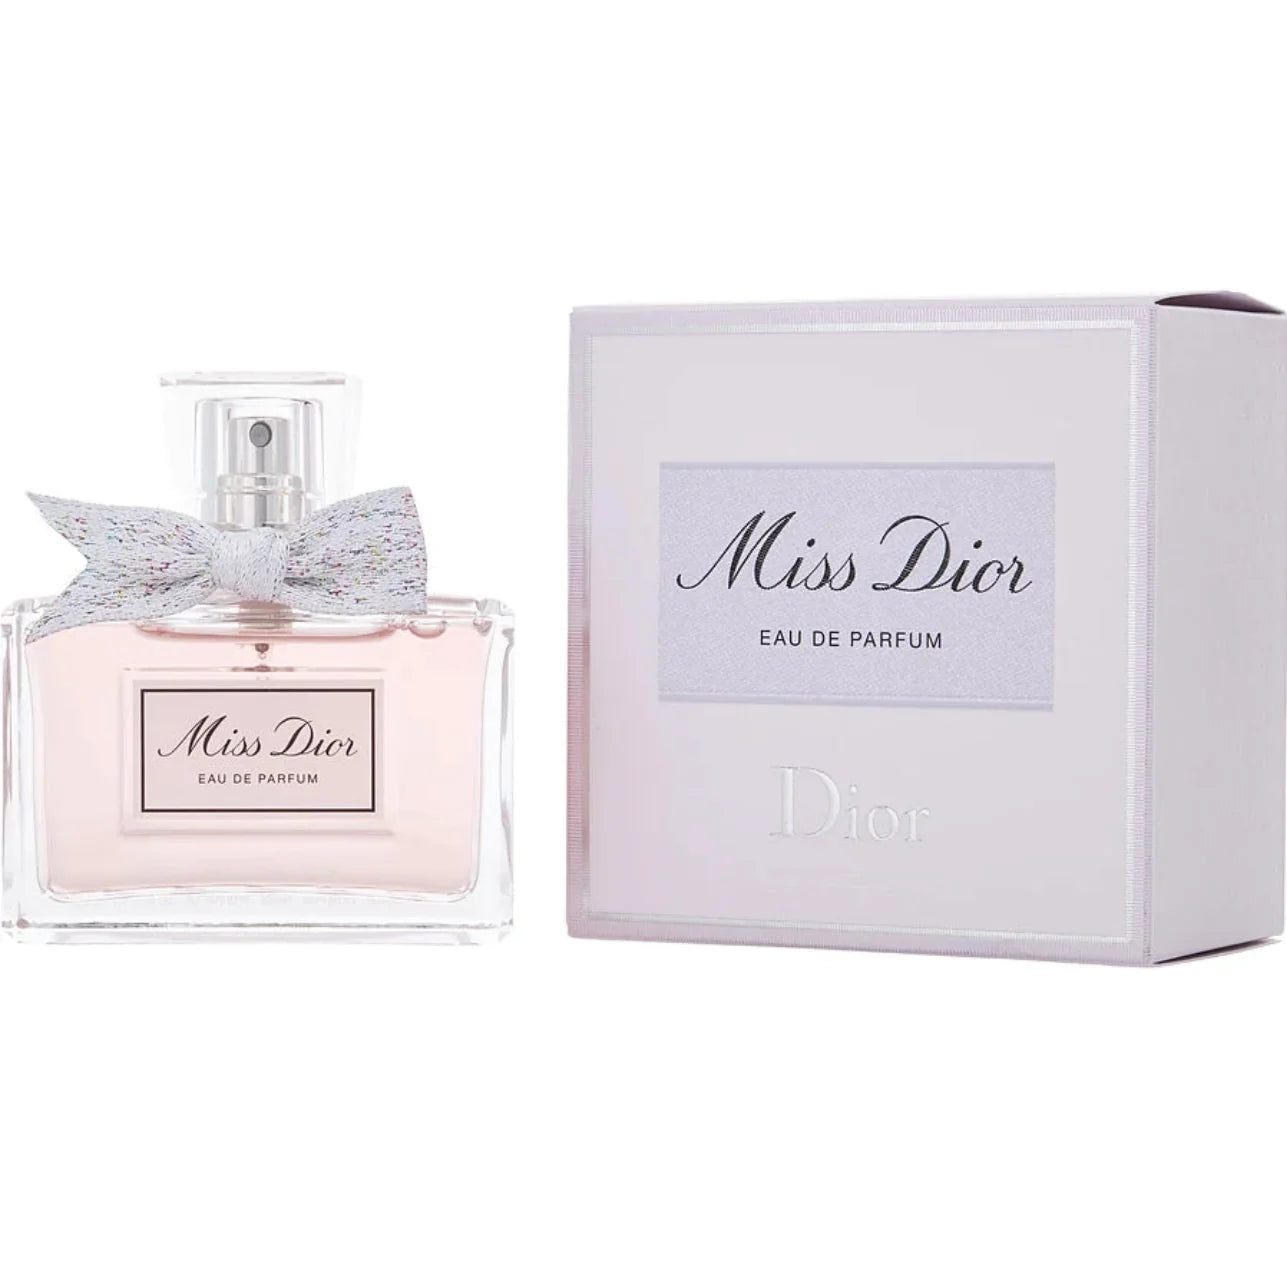 Miss Dior by Dior - Air freshener